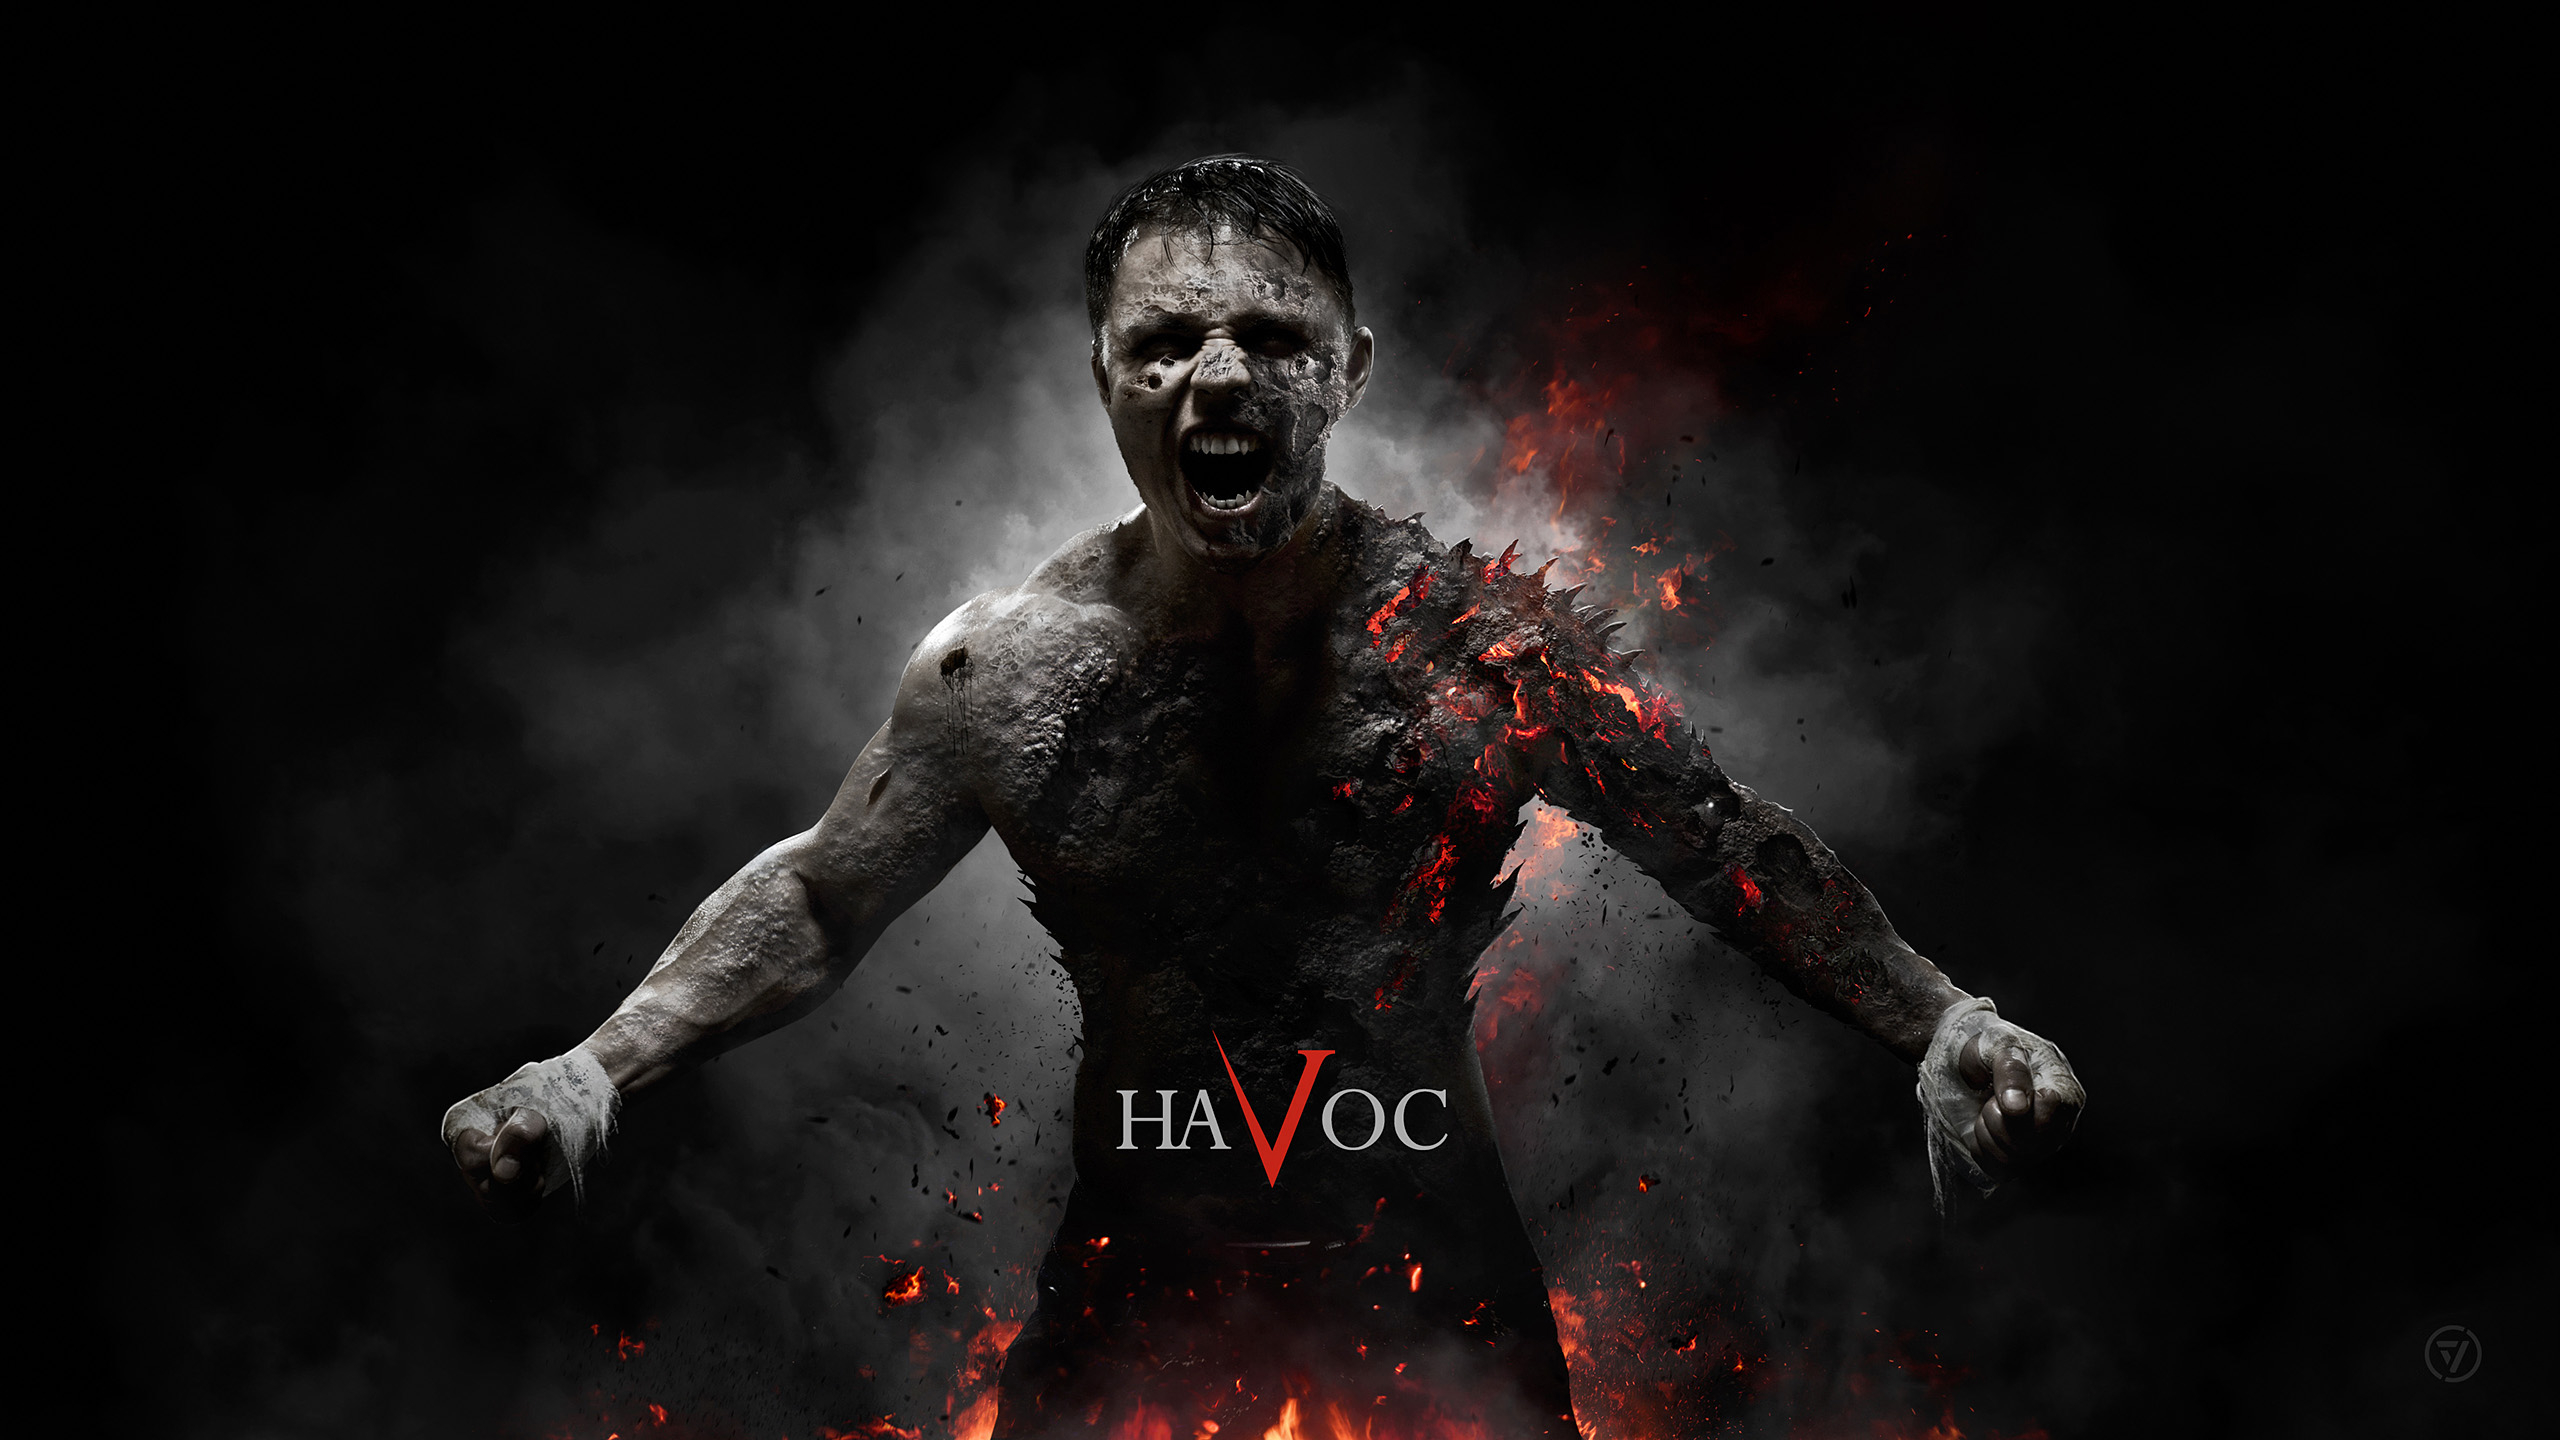 Havoc for 2560 x 1440 HDTV resolution